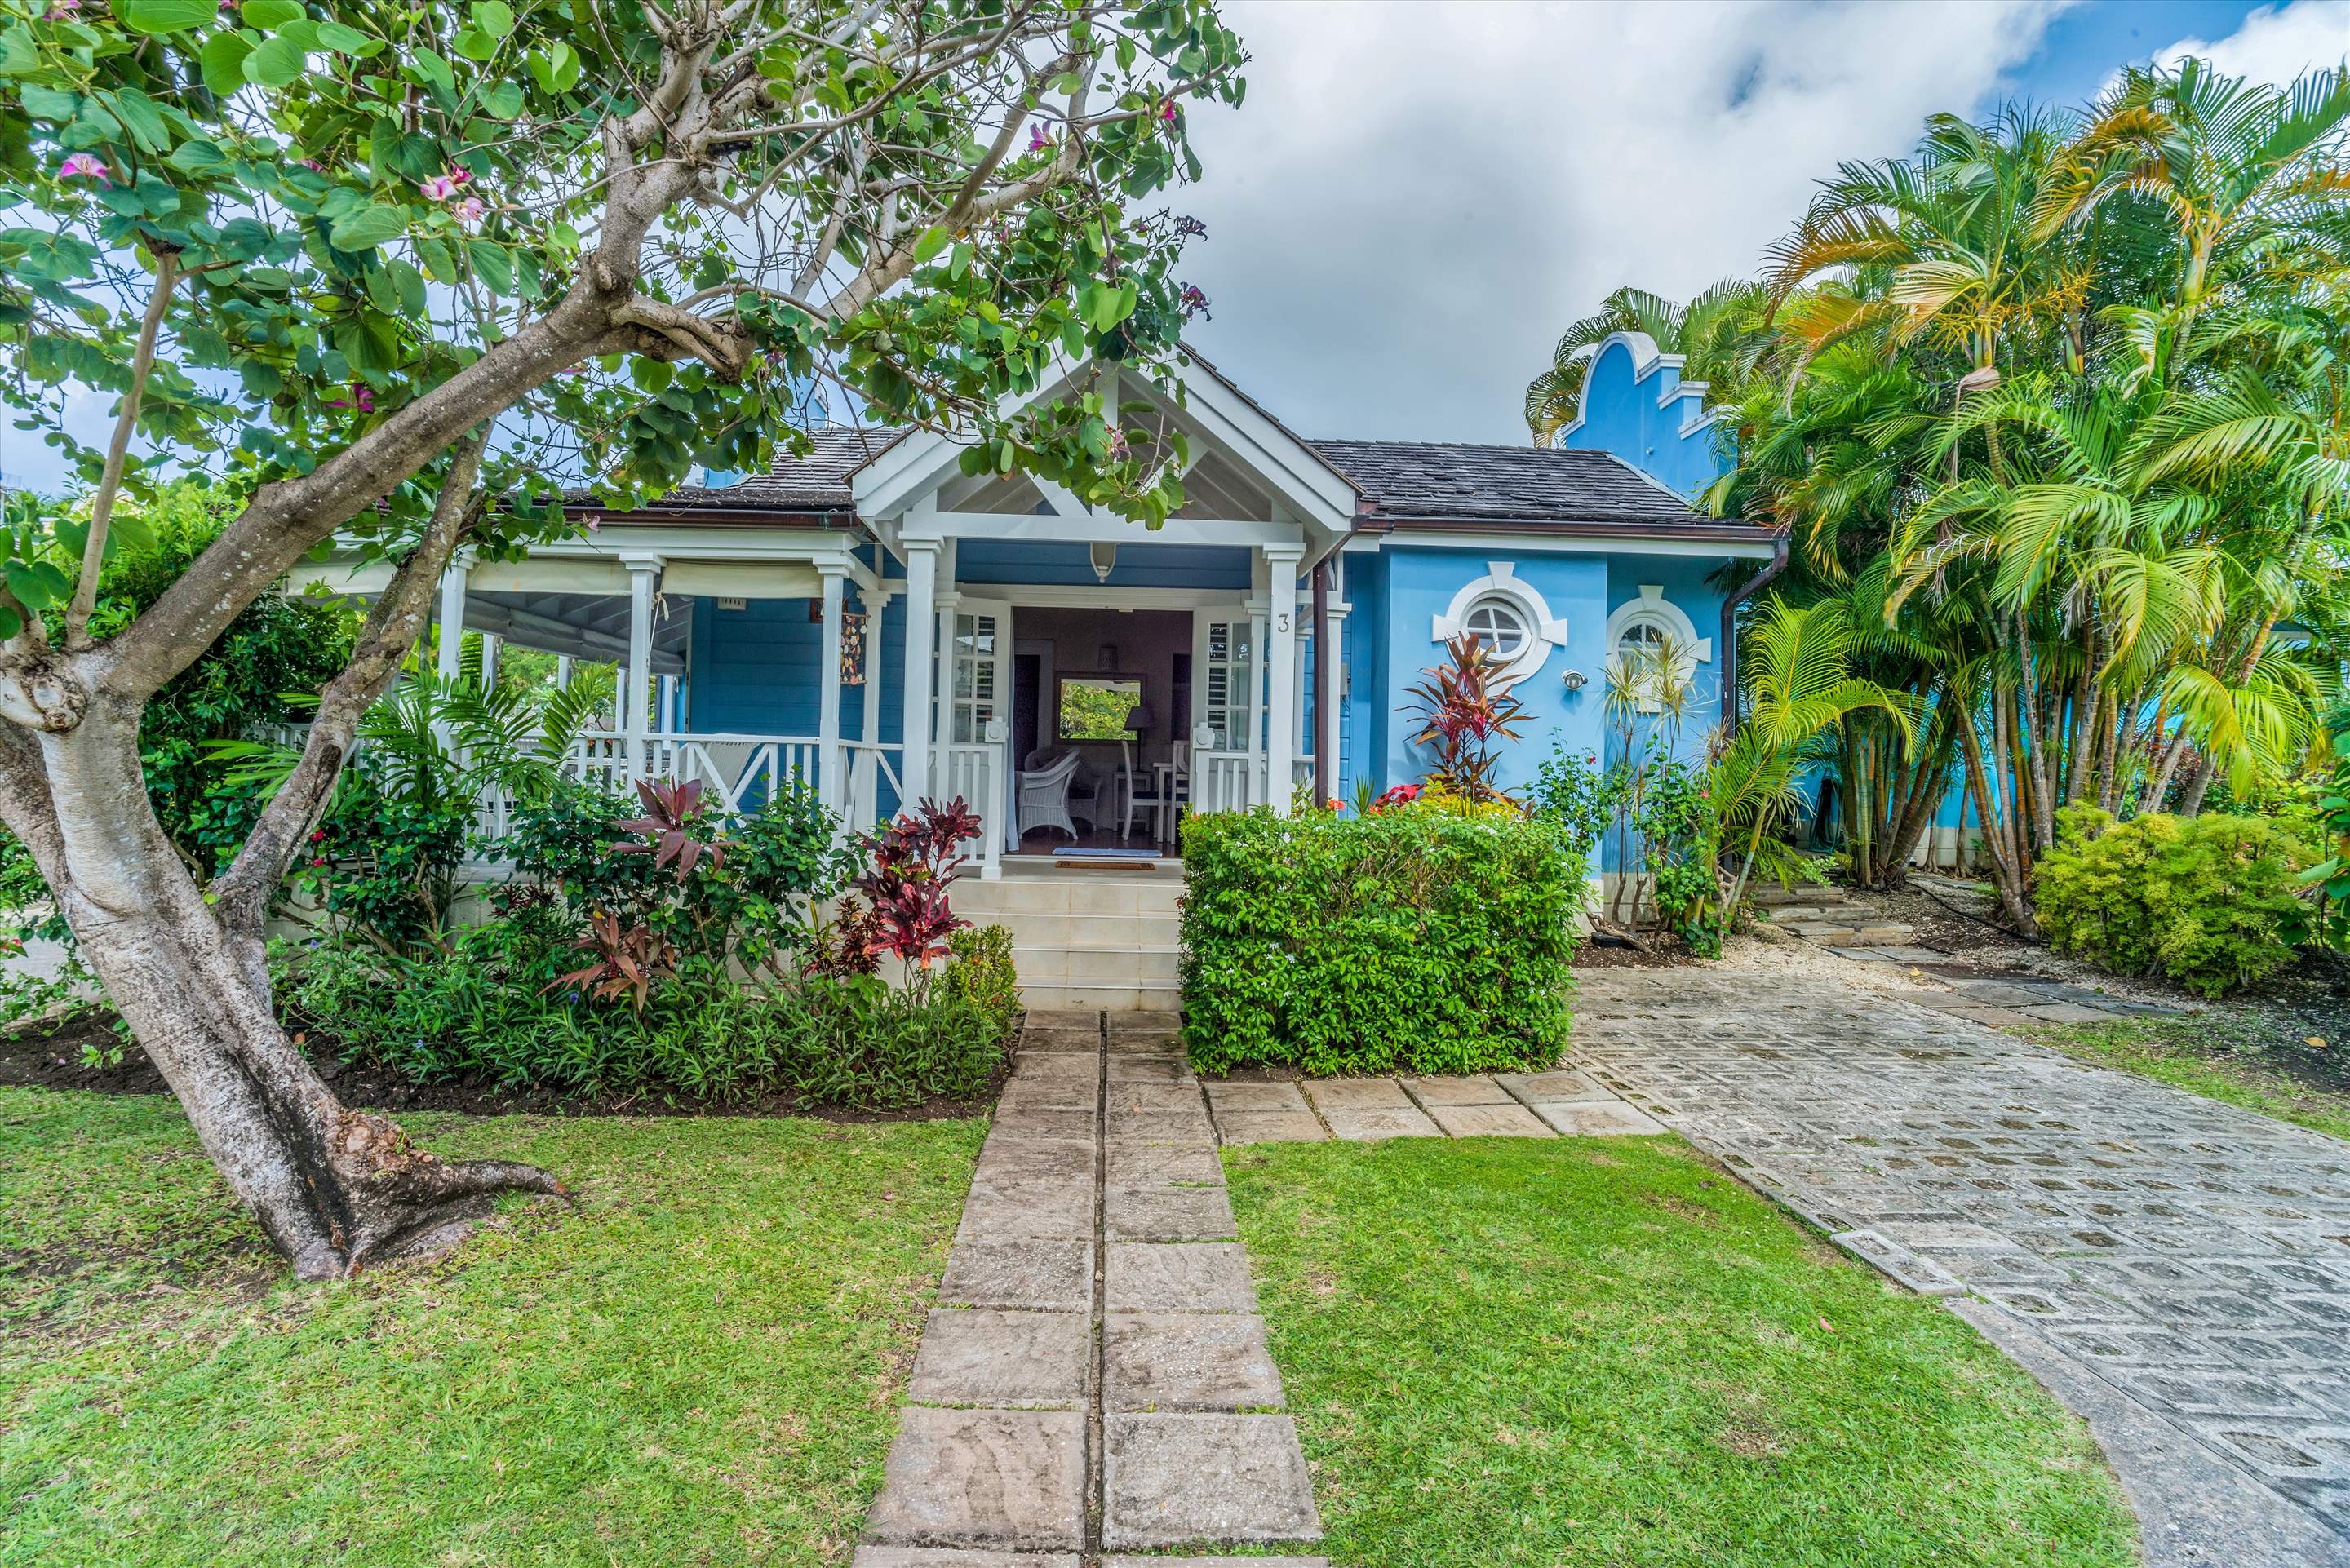 Porters Court 3, 1 bedroom, 1 bedroom villa in St. James & West Coast, Barbados Photo #3